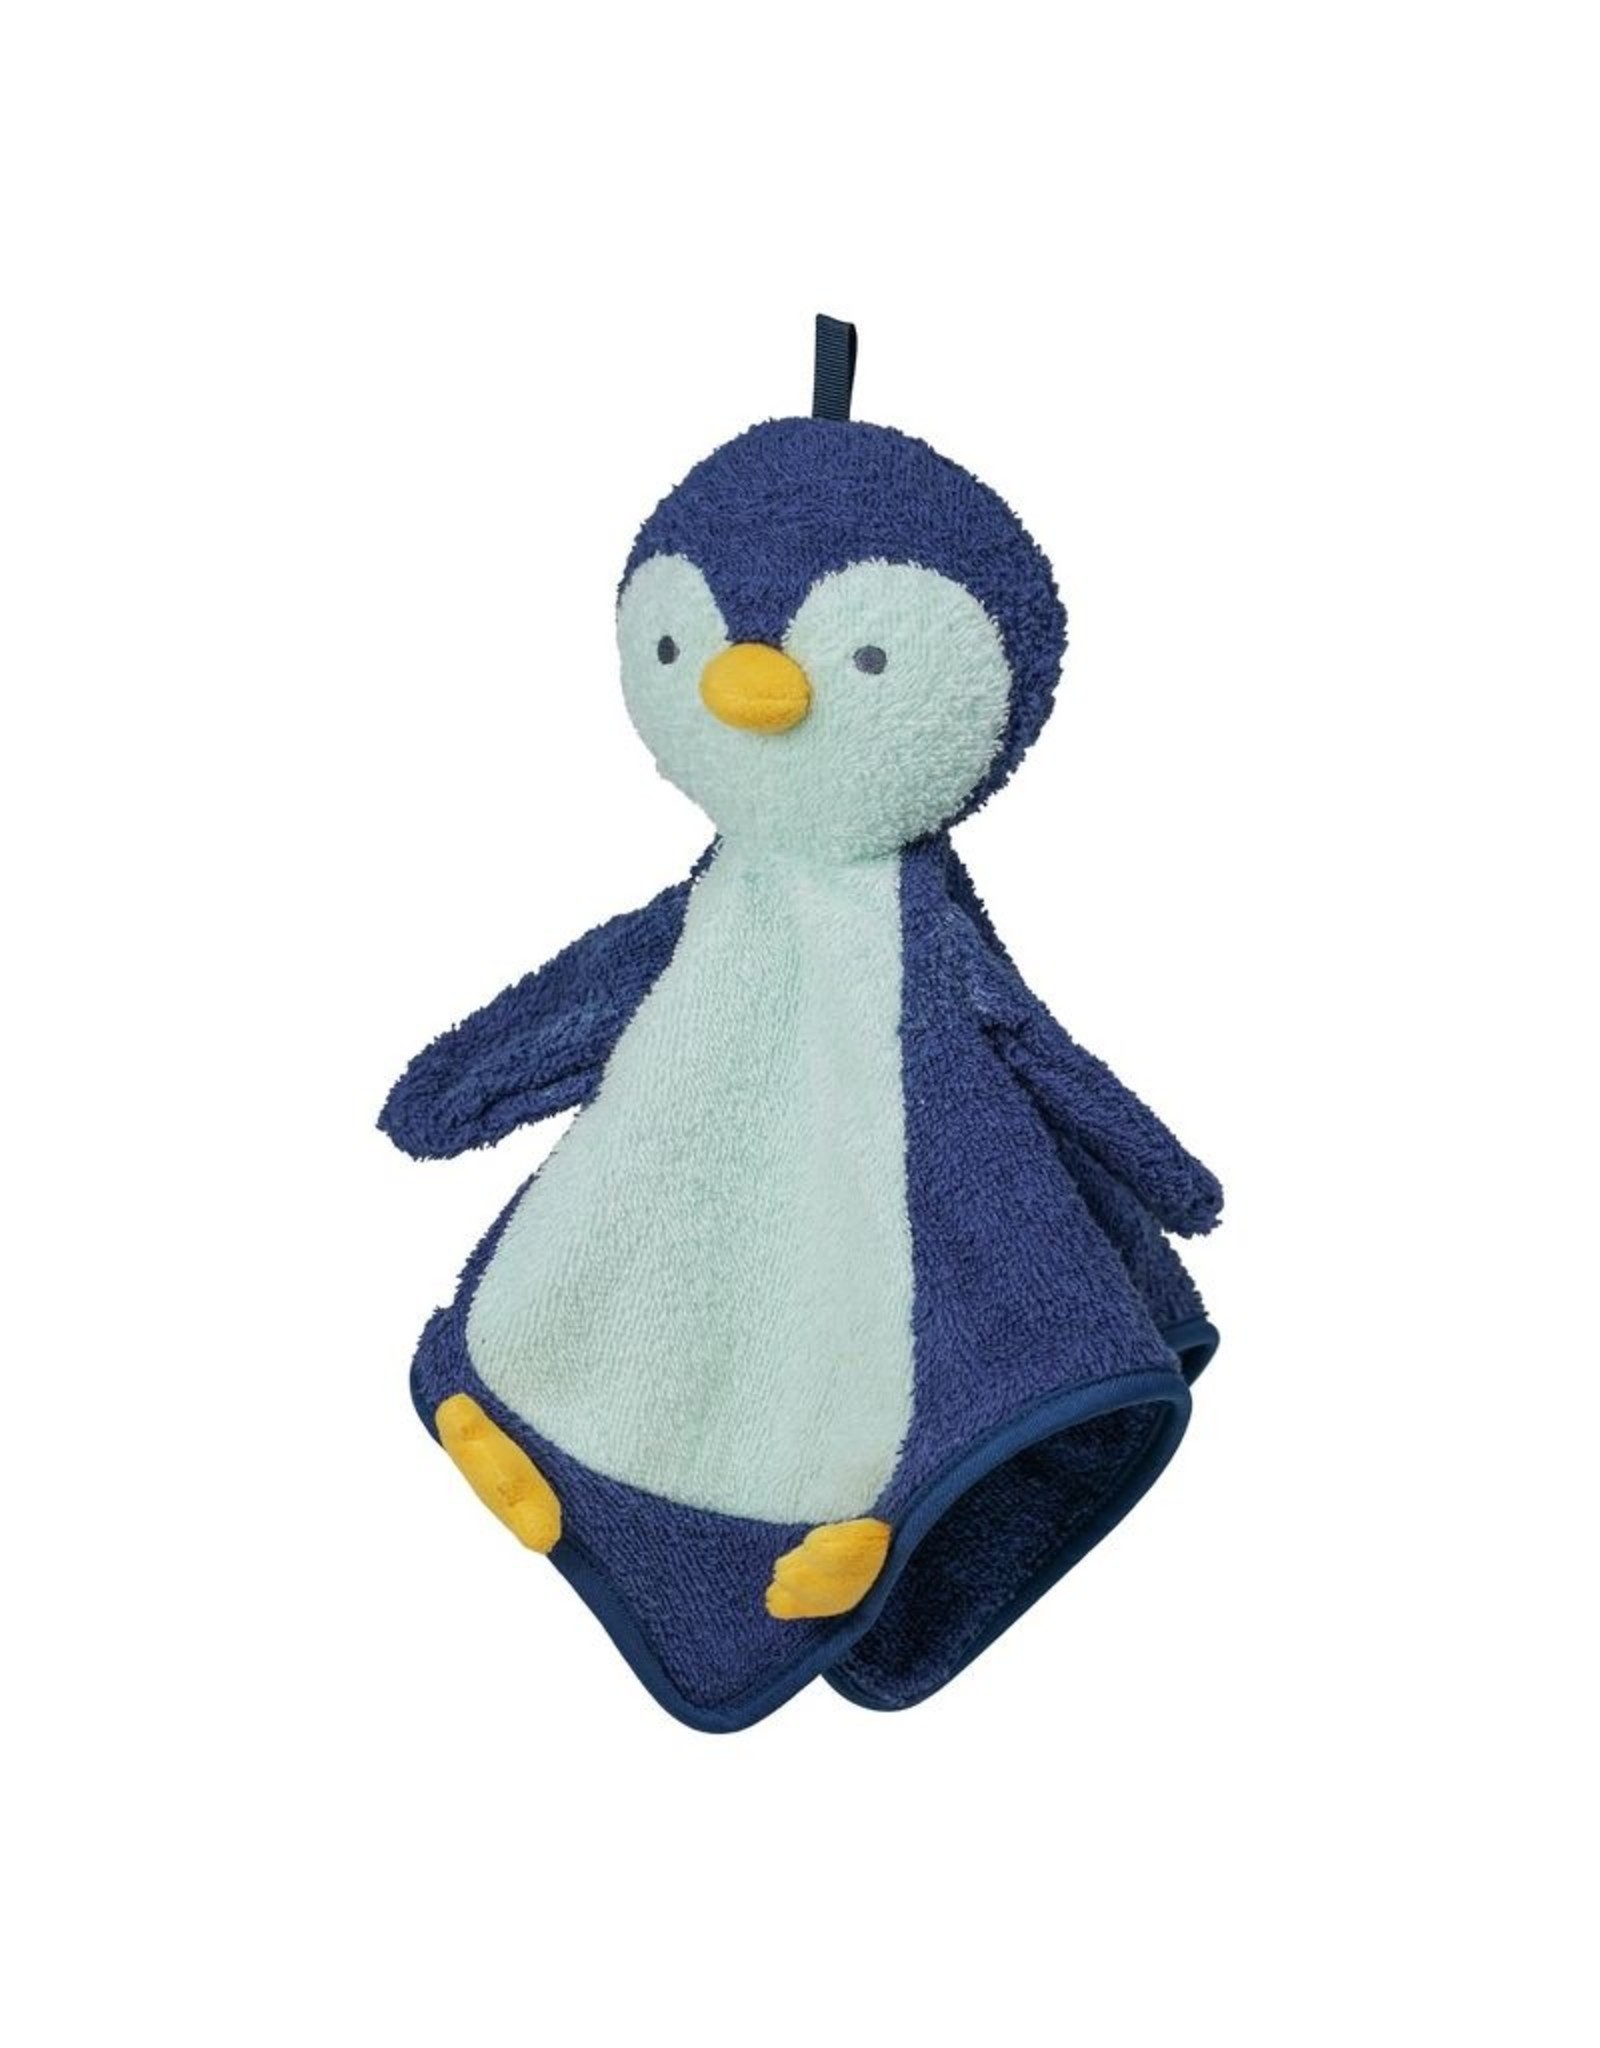 Penny Penguin Scrub-A-Dubbie